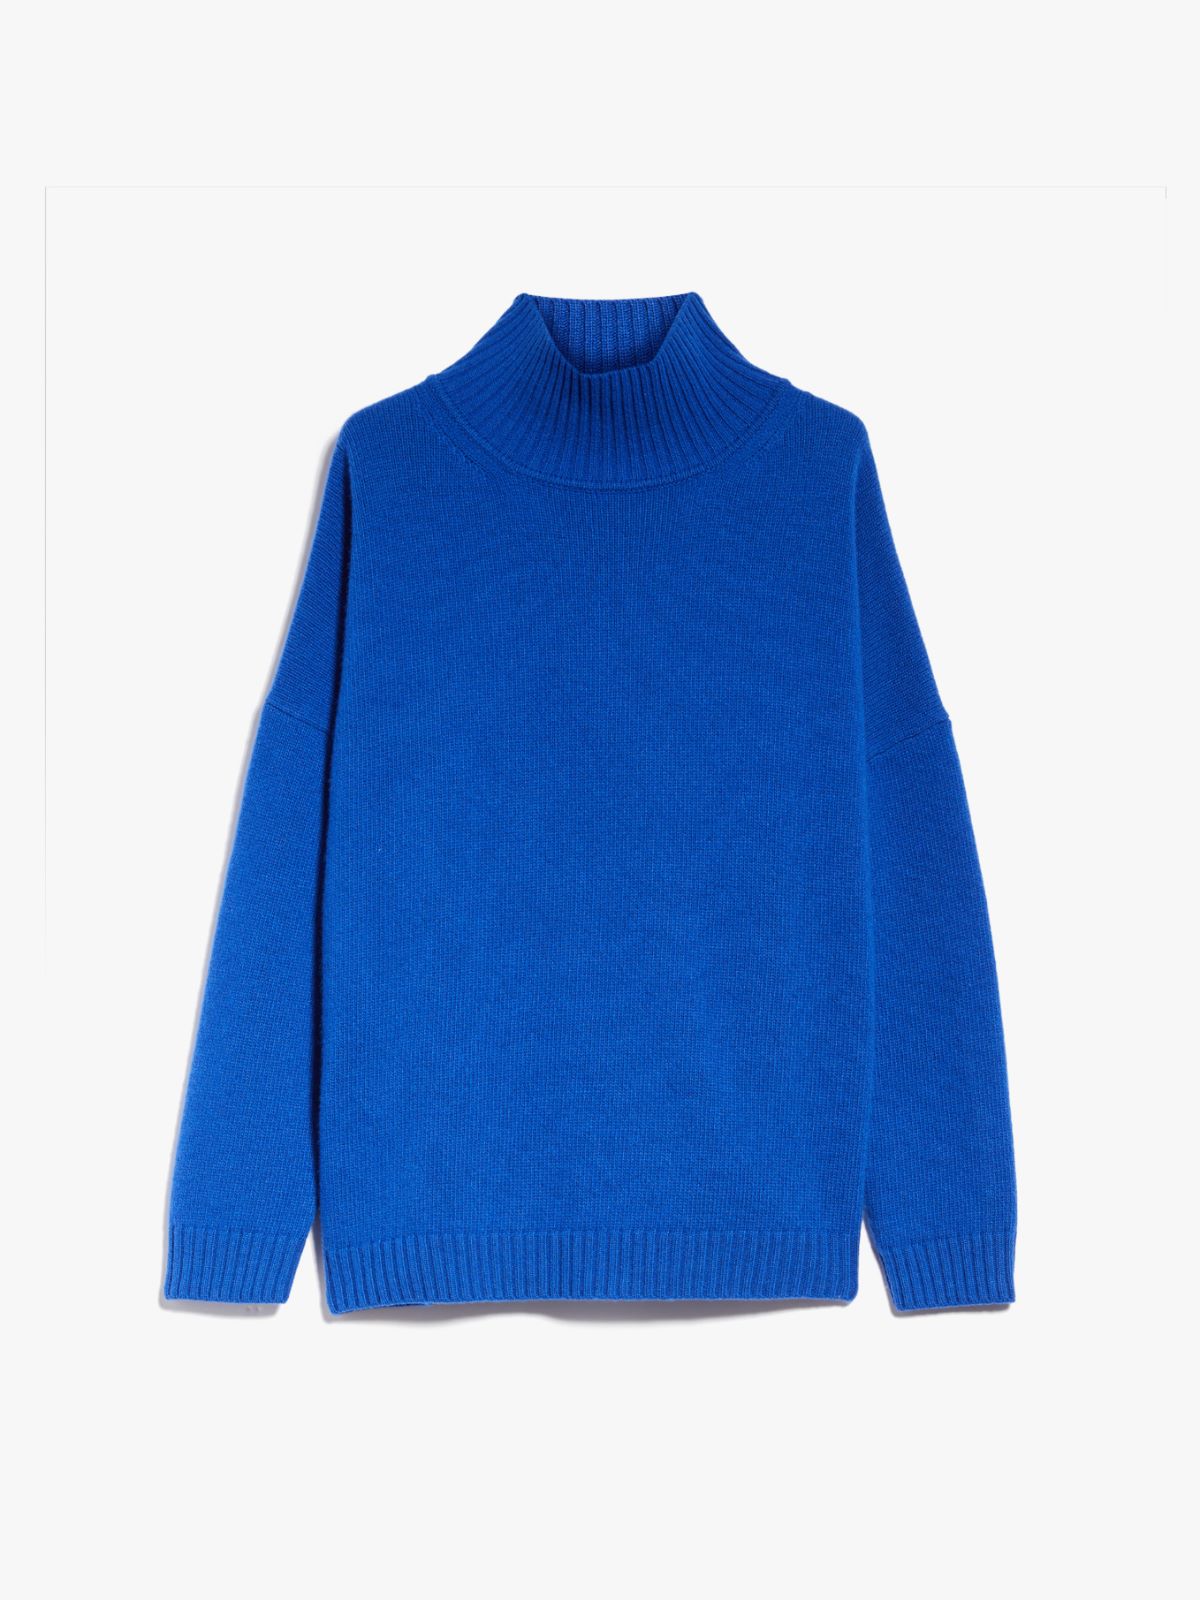 Wool yarn sweater - CORNFLOWER BLUE - Weekend Max Mara - 6